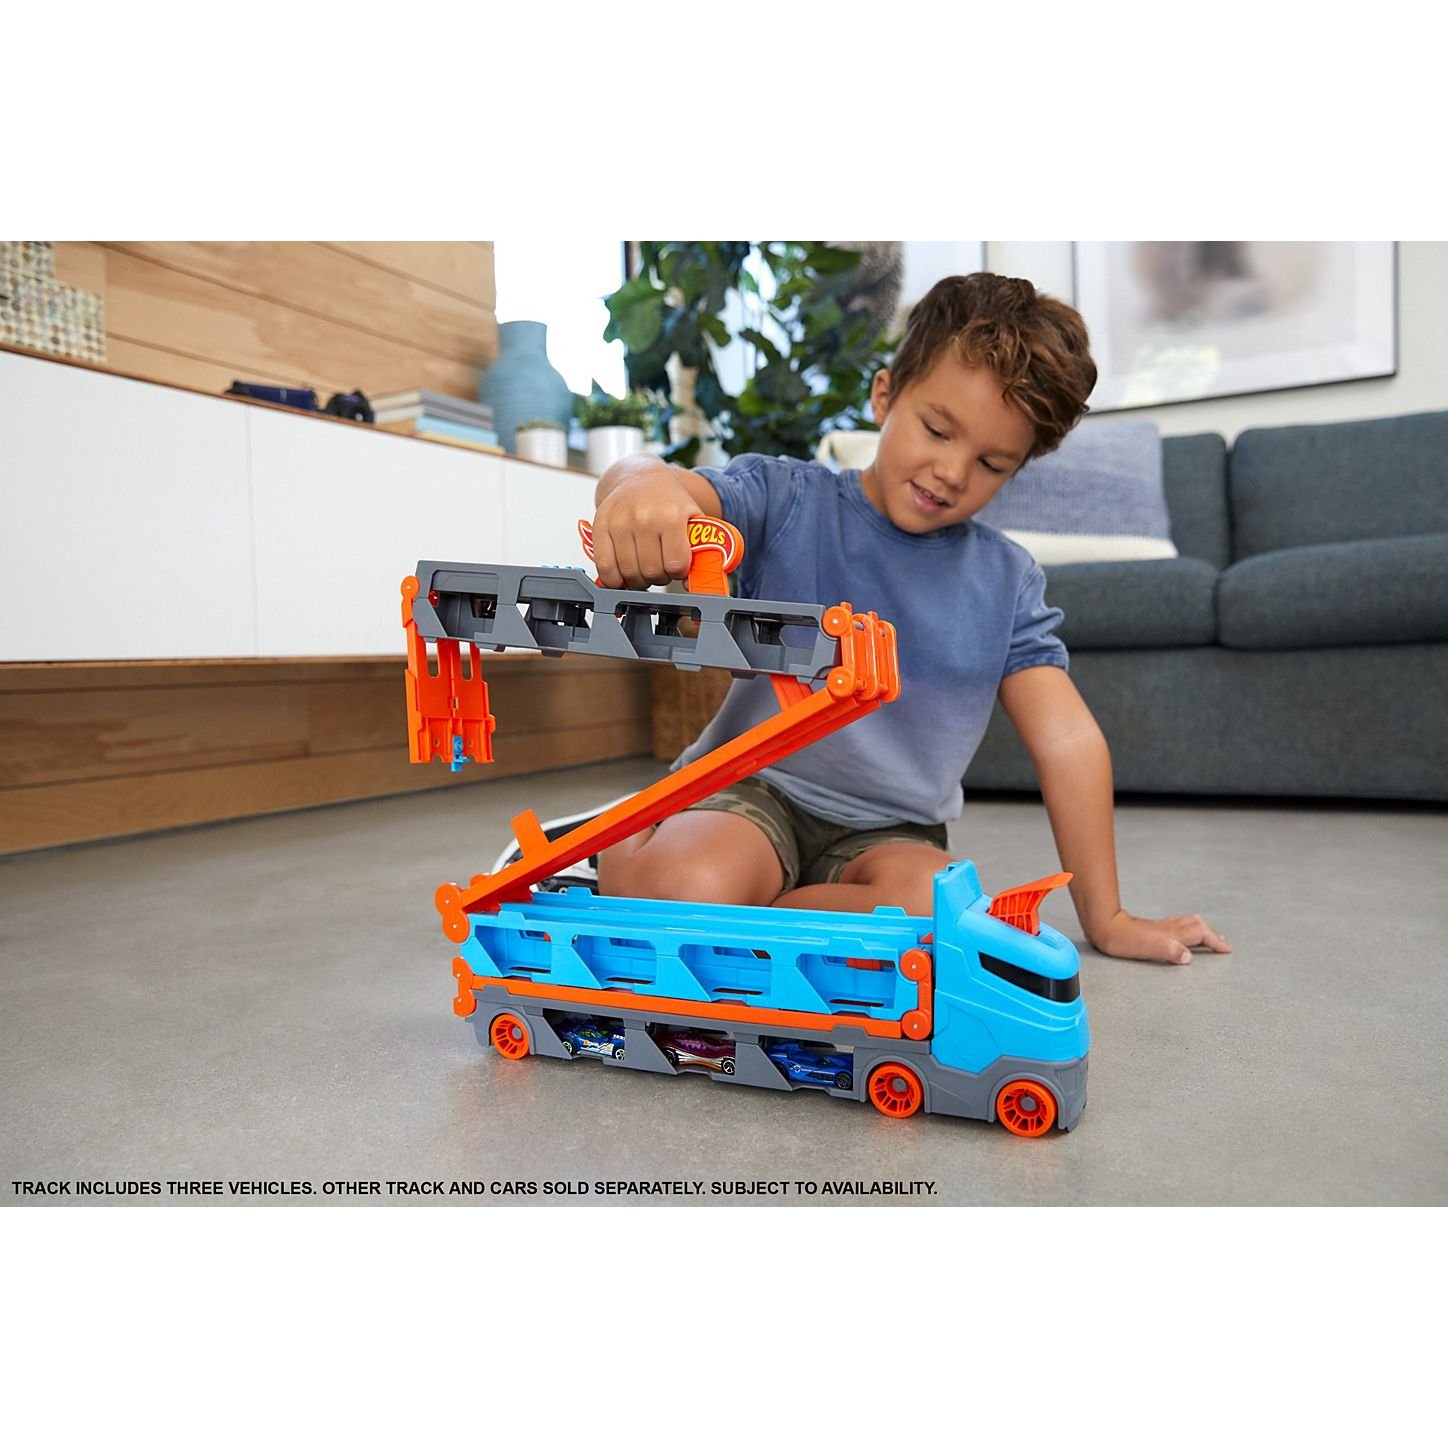 Brinquedo da Hot Wheels transforma paredes em pistas de corrida » Mãe de  Menino